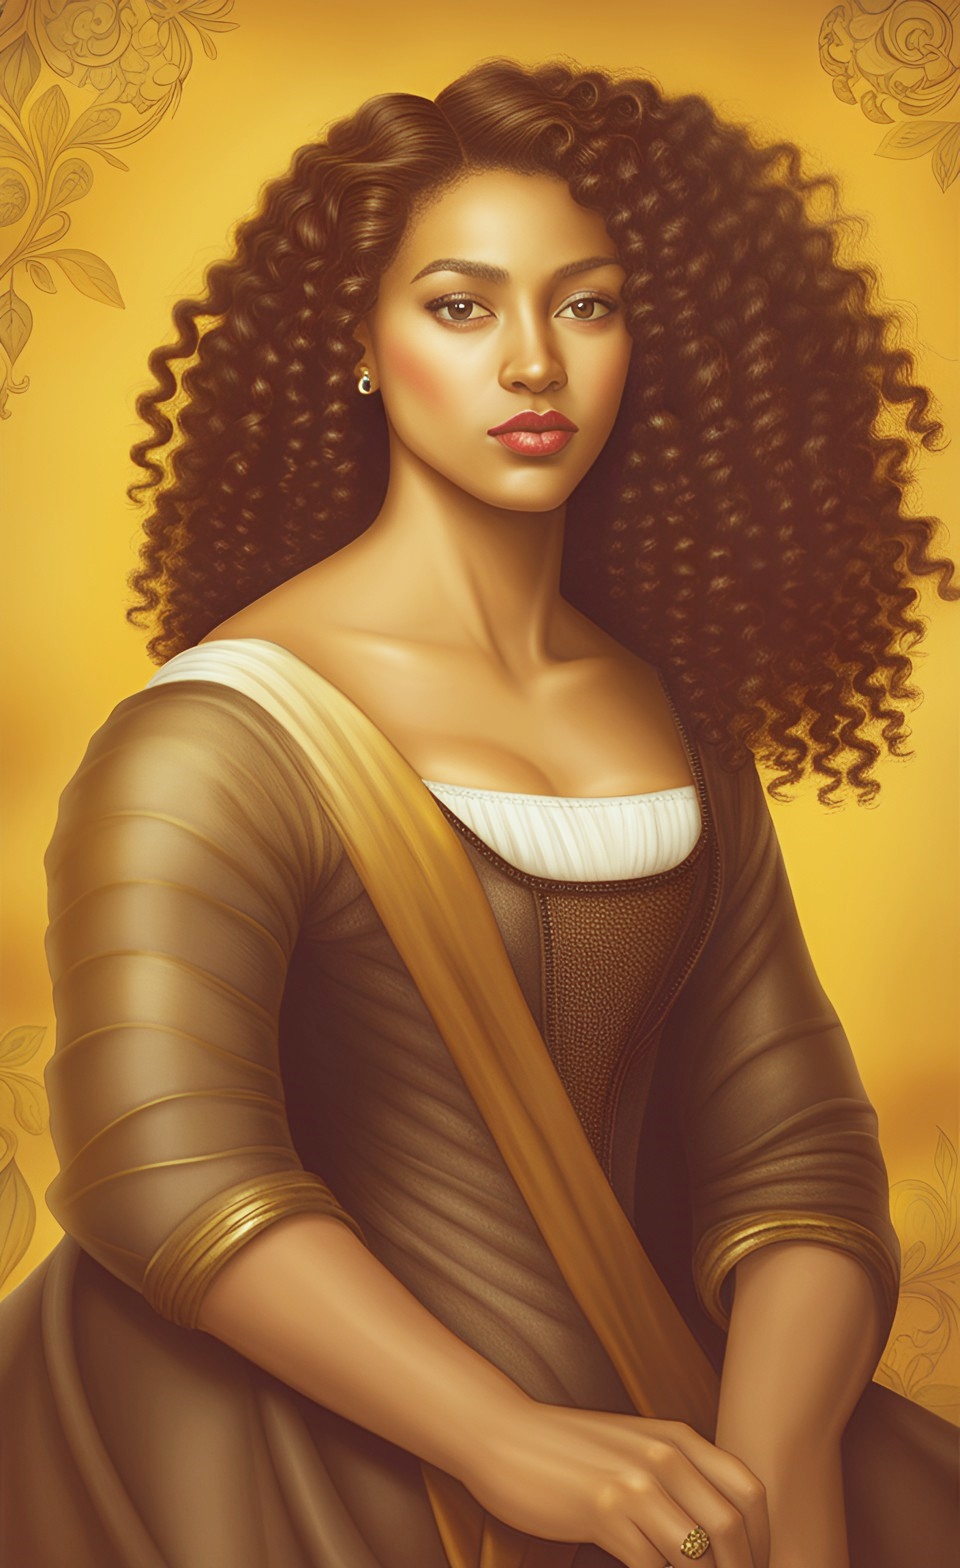 Beautiful iconic art work of mixed-race women Dreamc22